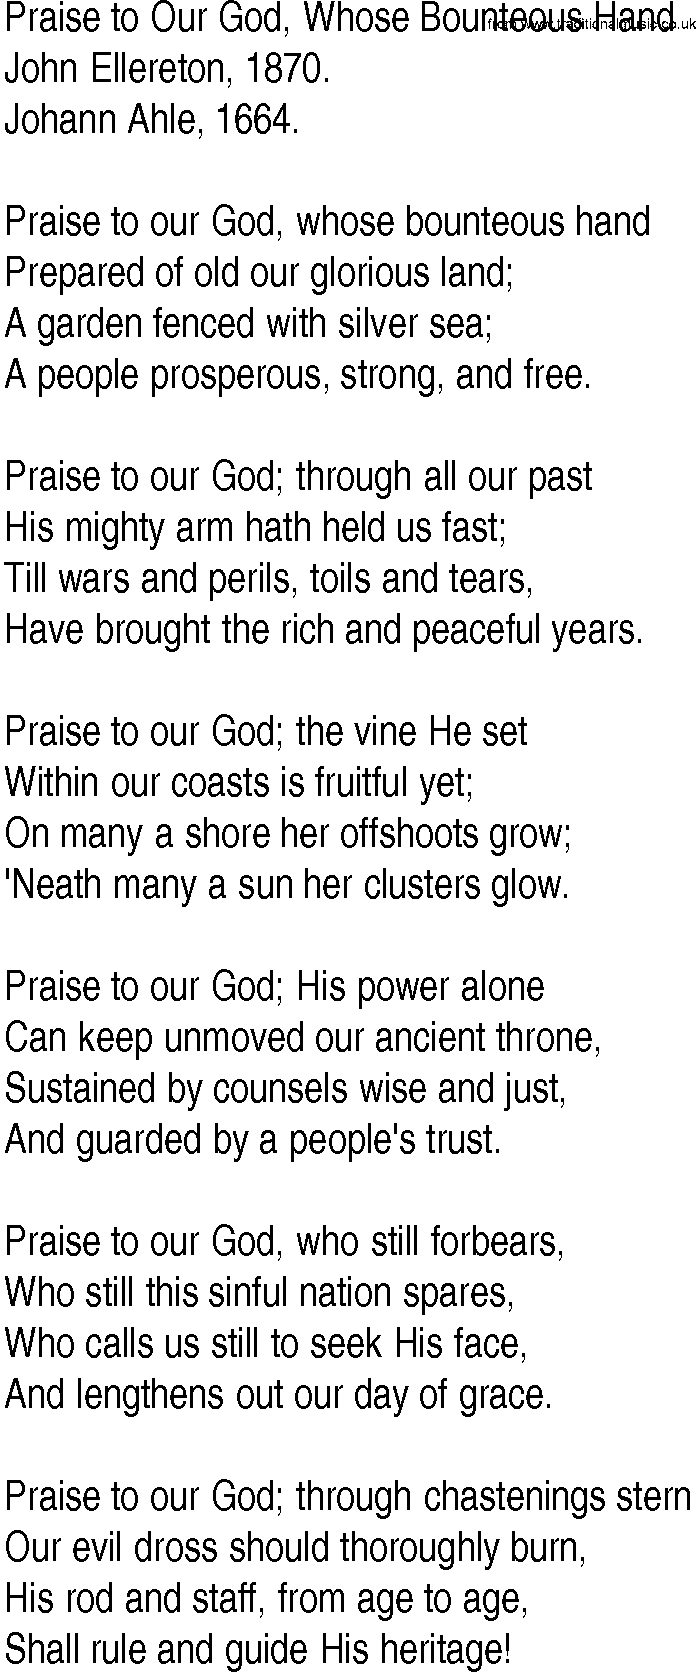 Hymn and Gospel Song: Praise to Our God, Whose Bounteous Hand by John Ellereton lyrics